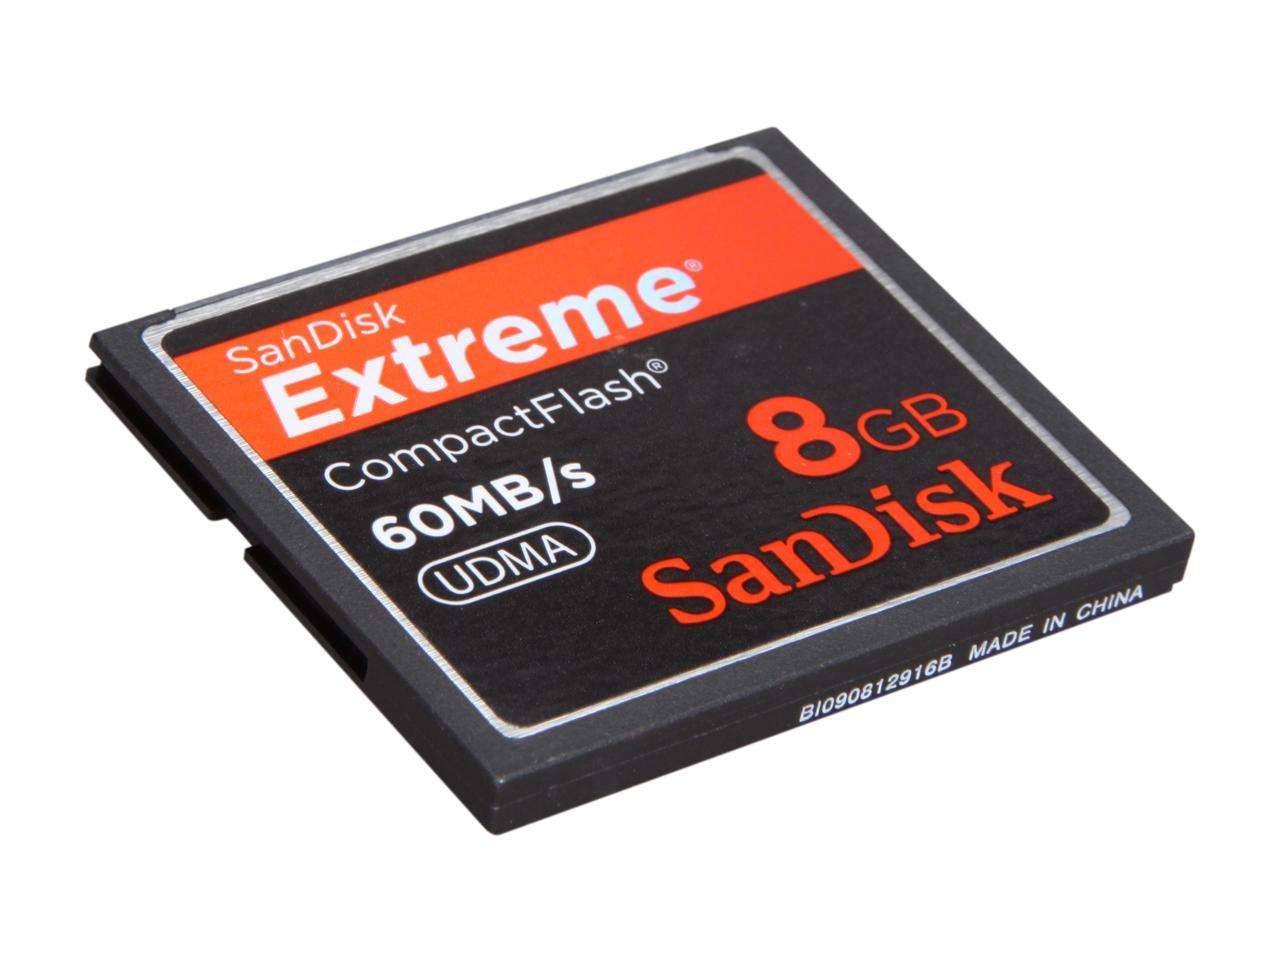 Cf flash. SANDISK Compact Flash. Карта памяти SANDISK 16gb extreme III COMPACTFLASH. SANDISK extreme 8 GB. Карта памяти SANDISK extreme III 30mb/s COMPACTFLASH 32gb.